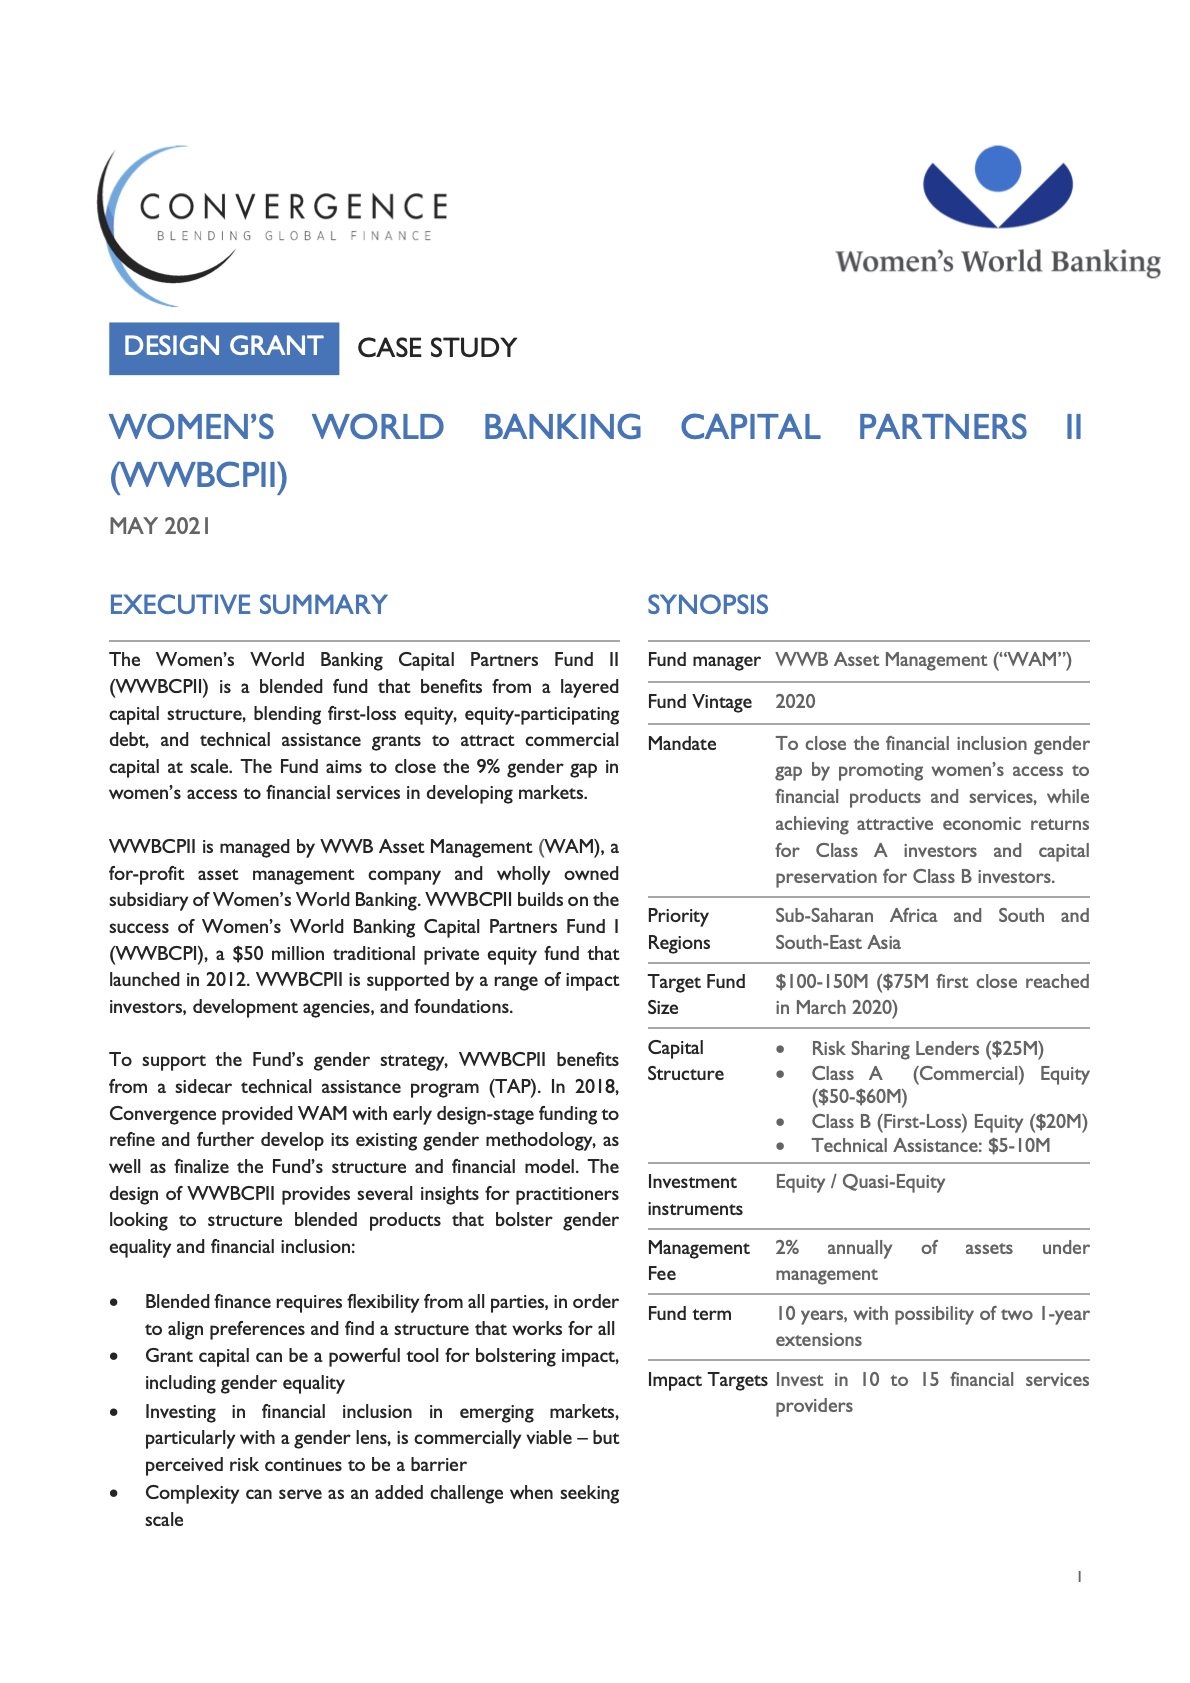 Women's World Banking Capital Partners II (WWBCPII) Case Study